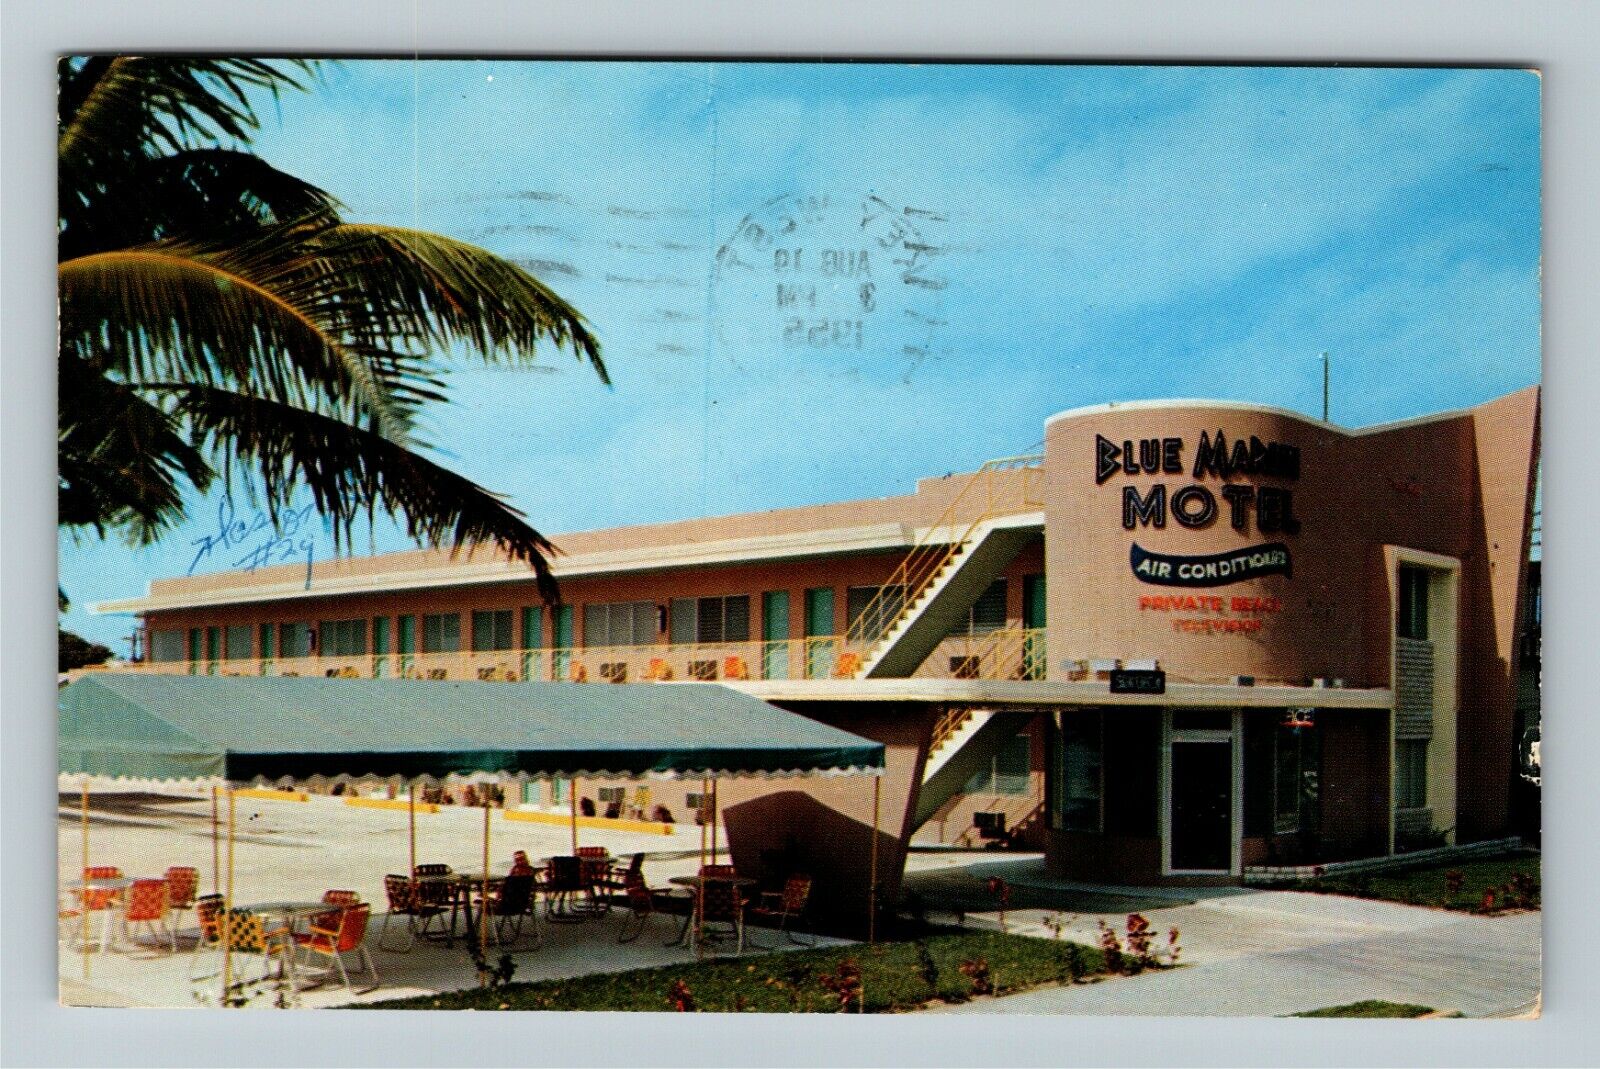 Key West FL-Florida, Blue Marlin Hotel, c1955 Vintage Souvenir Postcard